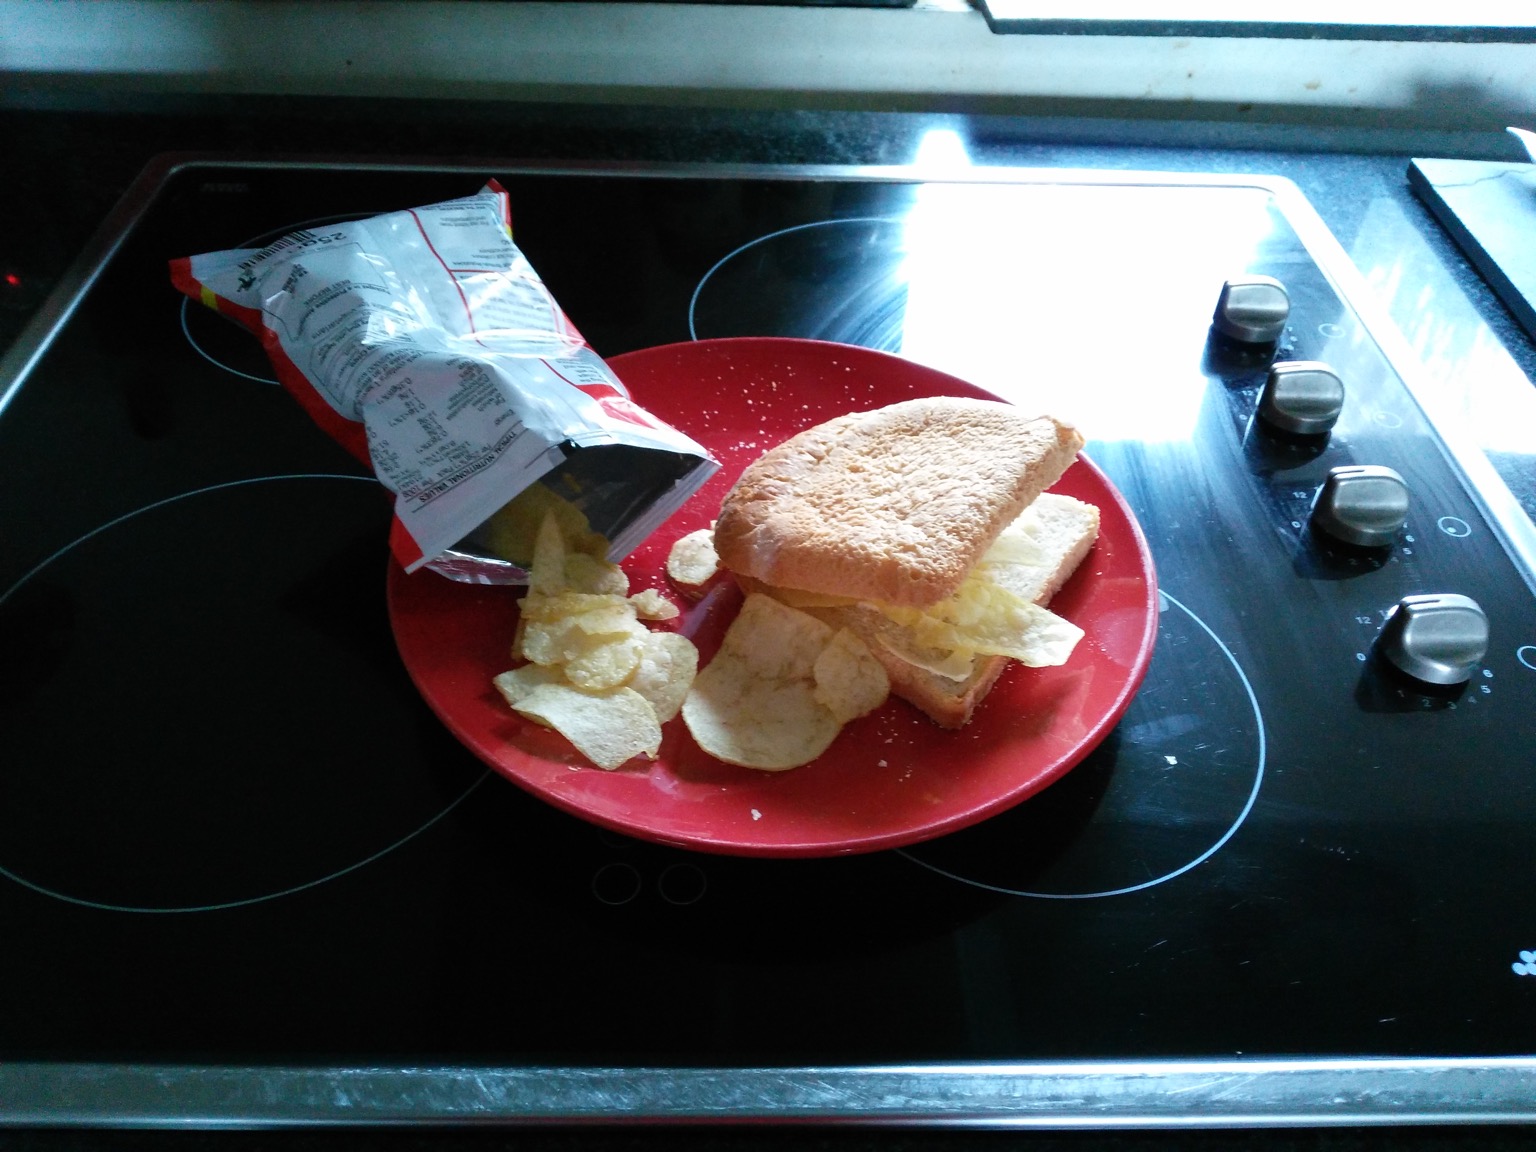 Crisp bag alongside white bread sandwich